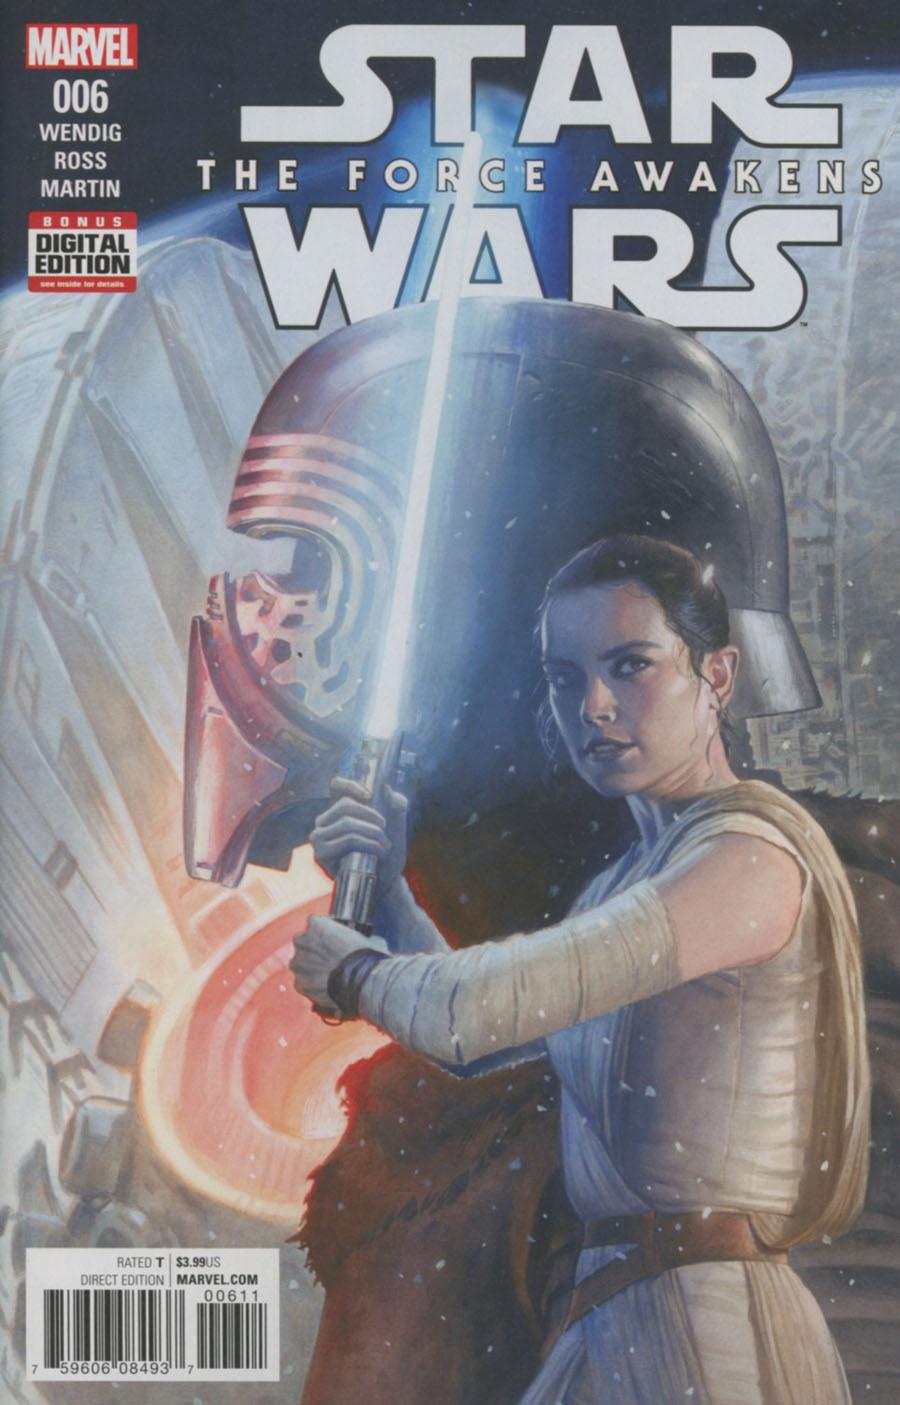 Star Wars Episode VII The Force Awakens Adaptation Vol. 1 #6